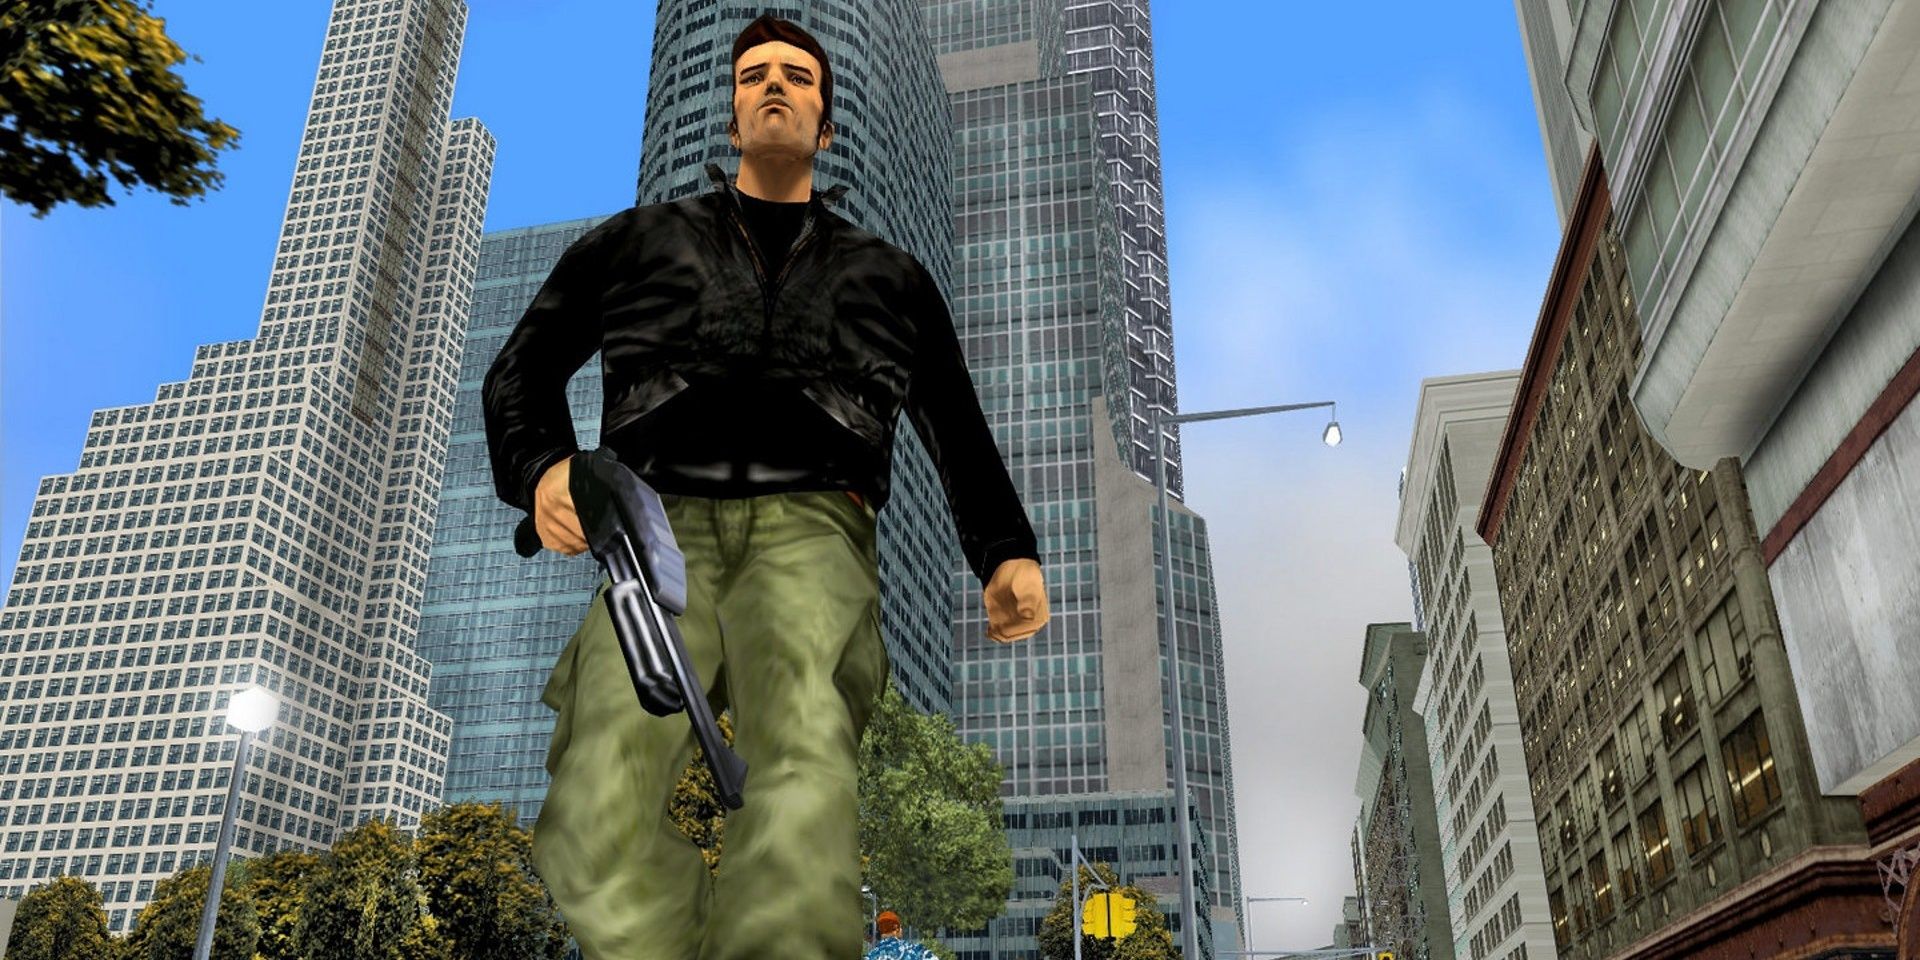 GTA3 Protagonist Walking With A Gun 